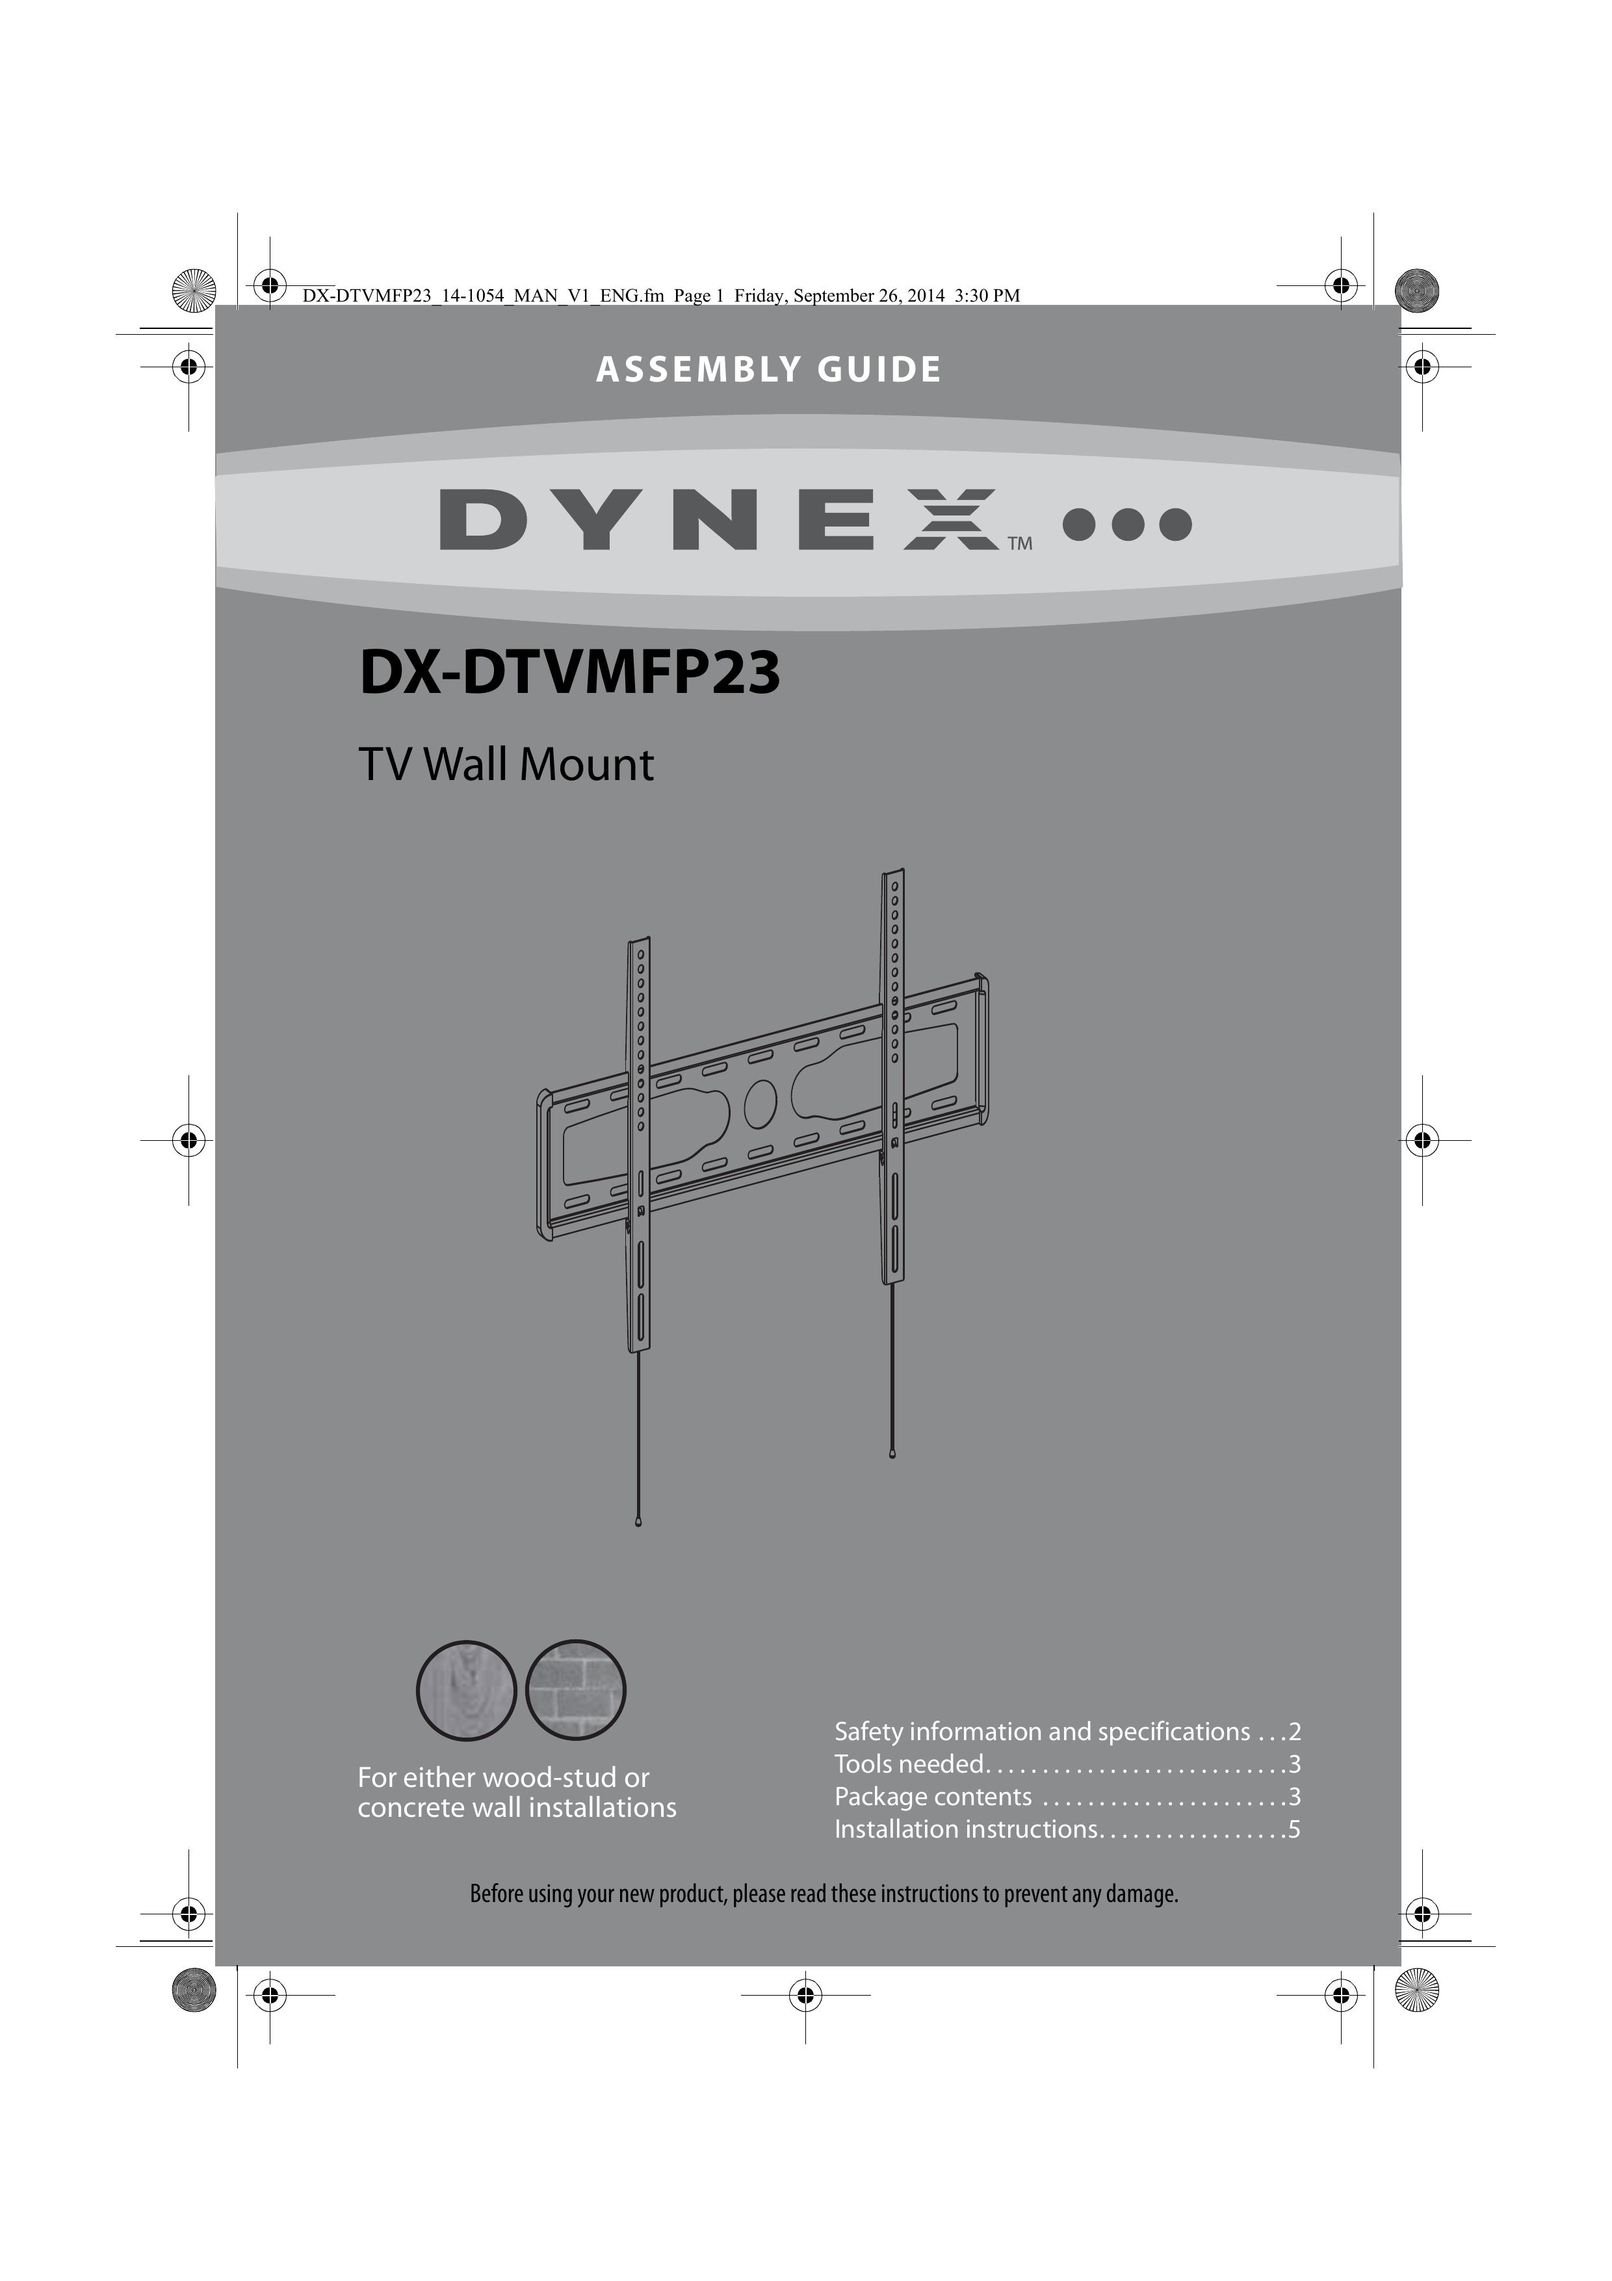 Dynex DX-DTVMFP23 TV Mount User Manual